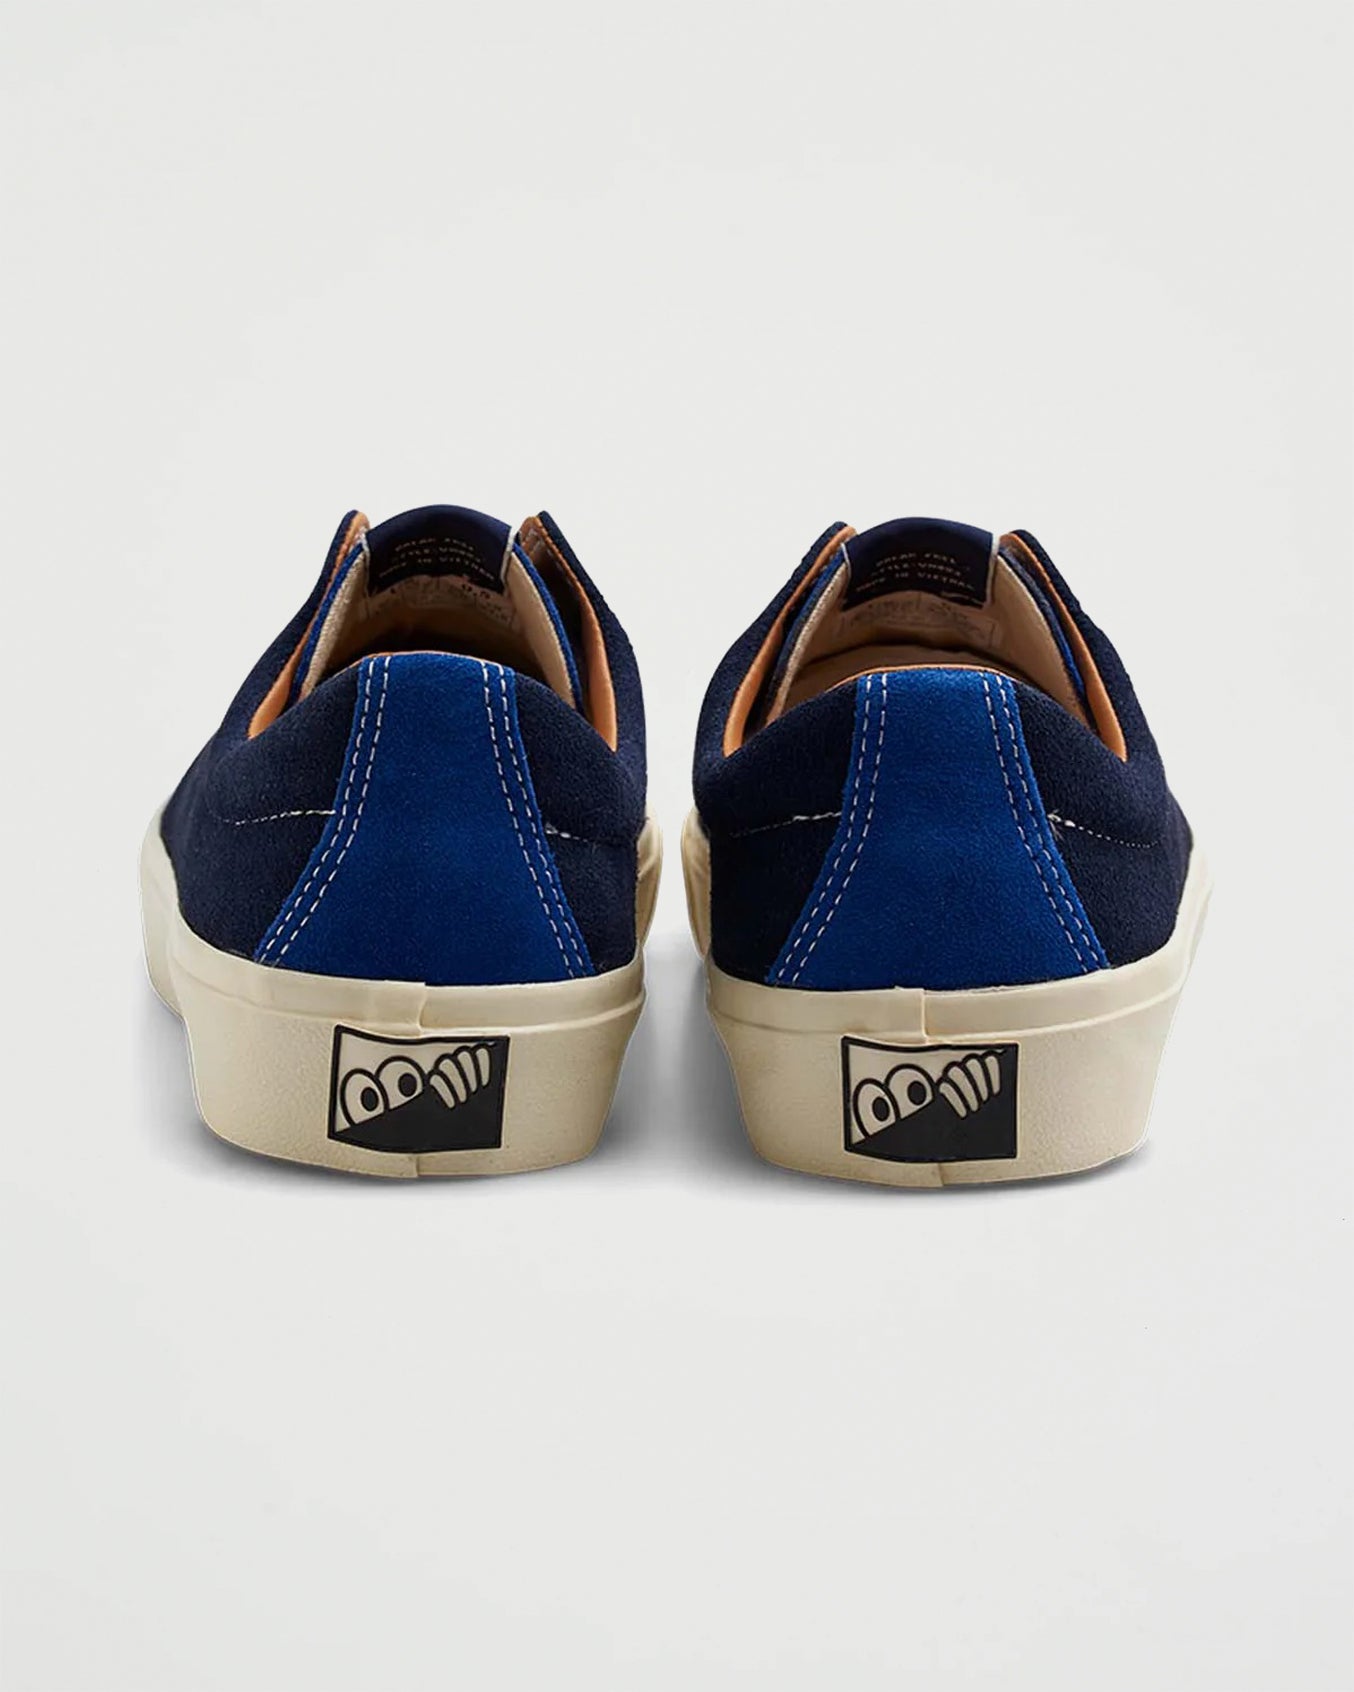 Last Resort AB VM003 Suede Lo Blue/White Shoes Sneakers Unisex